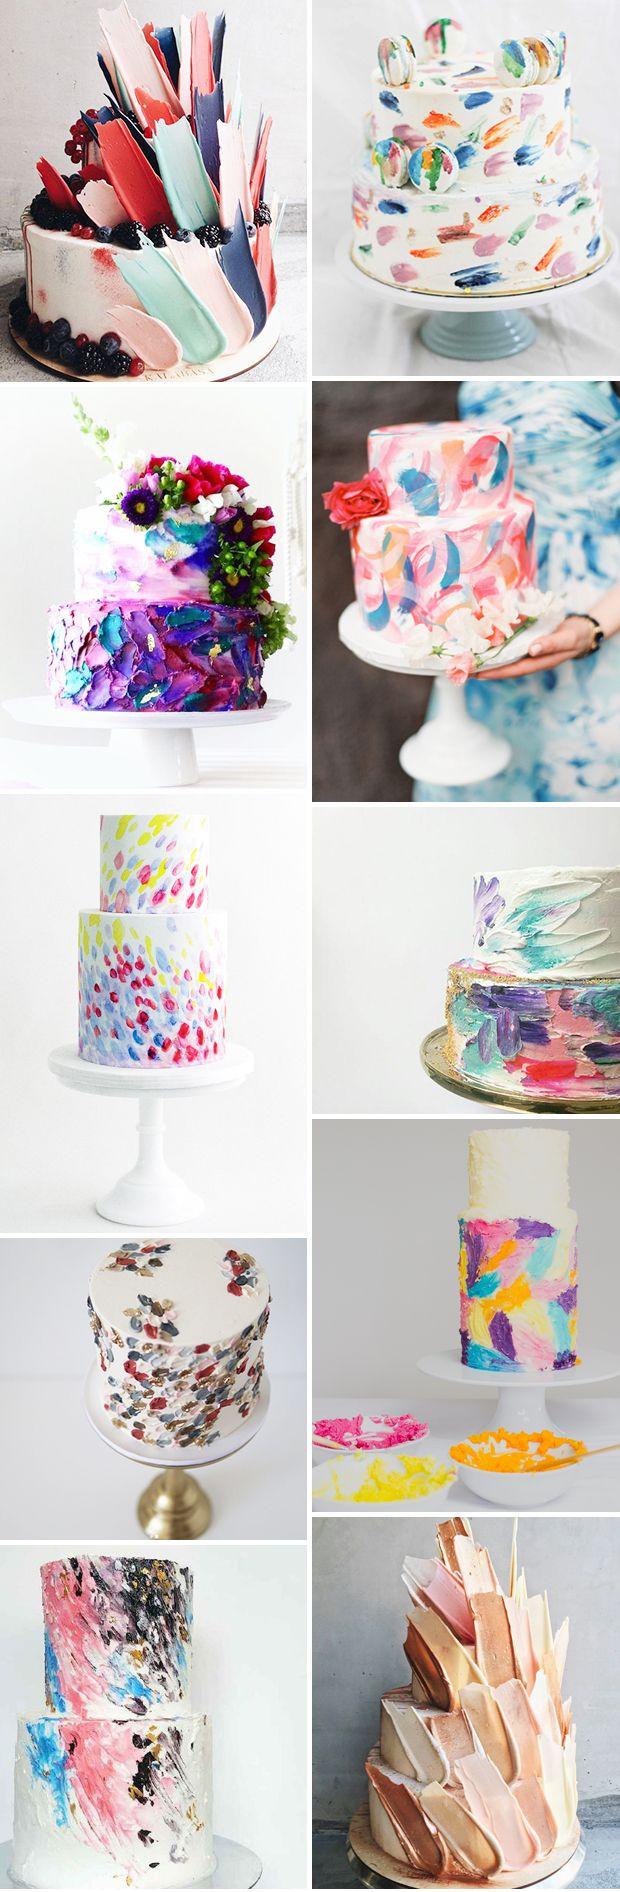 زفاف - Brushstroke Cakes - 12 Phenomenal Wedding Cake Works Of Art